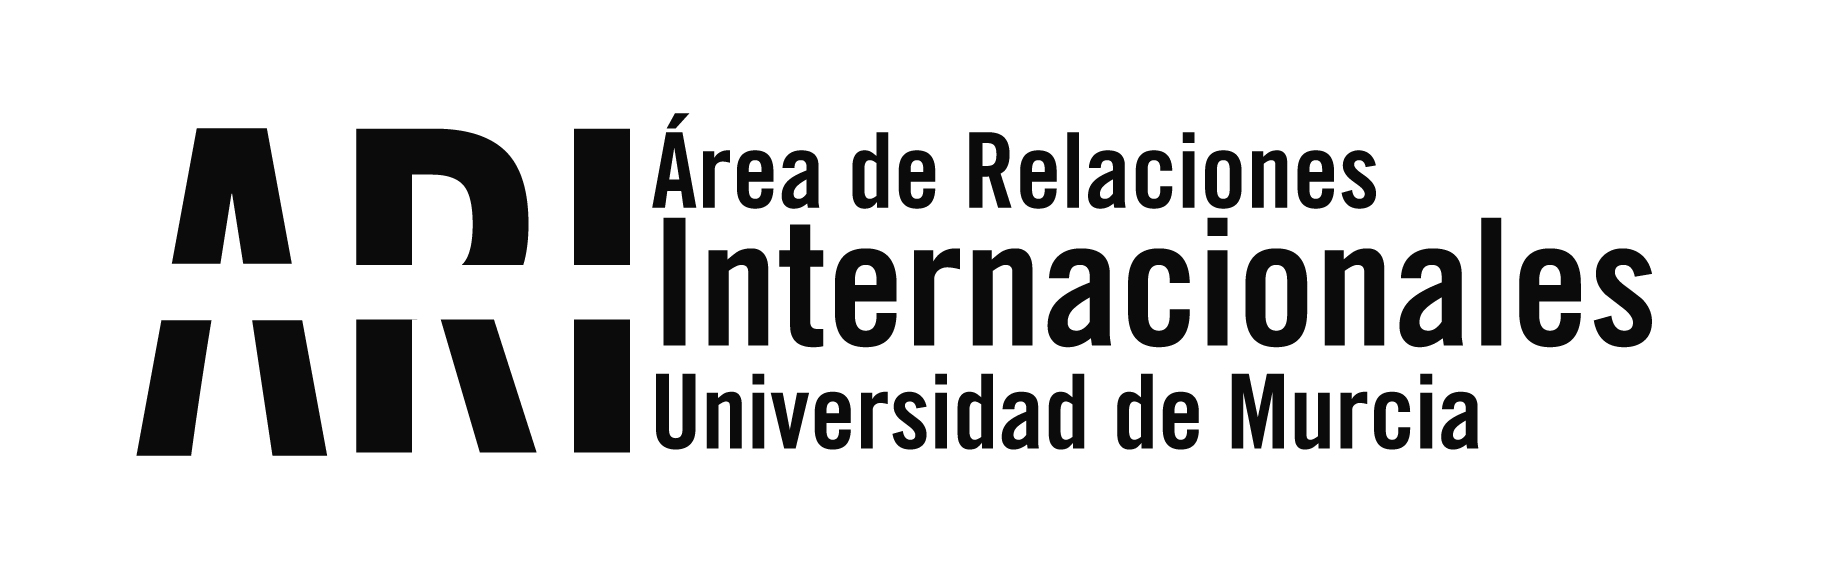 University of Murcia at EAIE and post-conference site tour - Área de Relaciones Internacionales